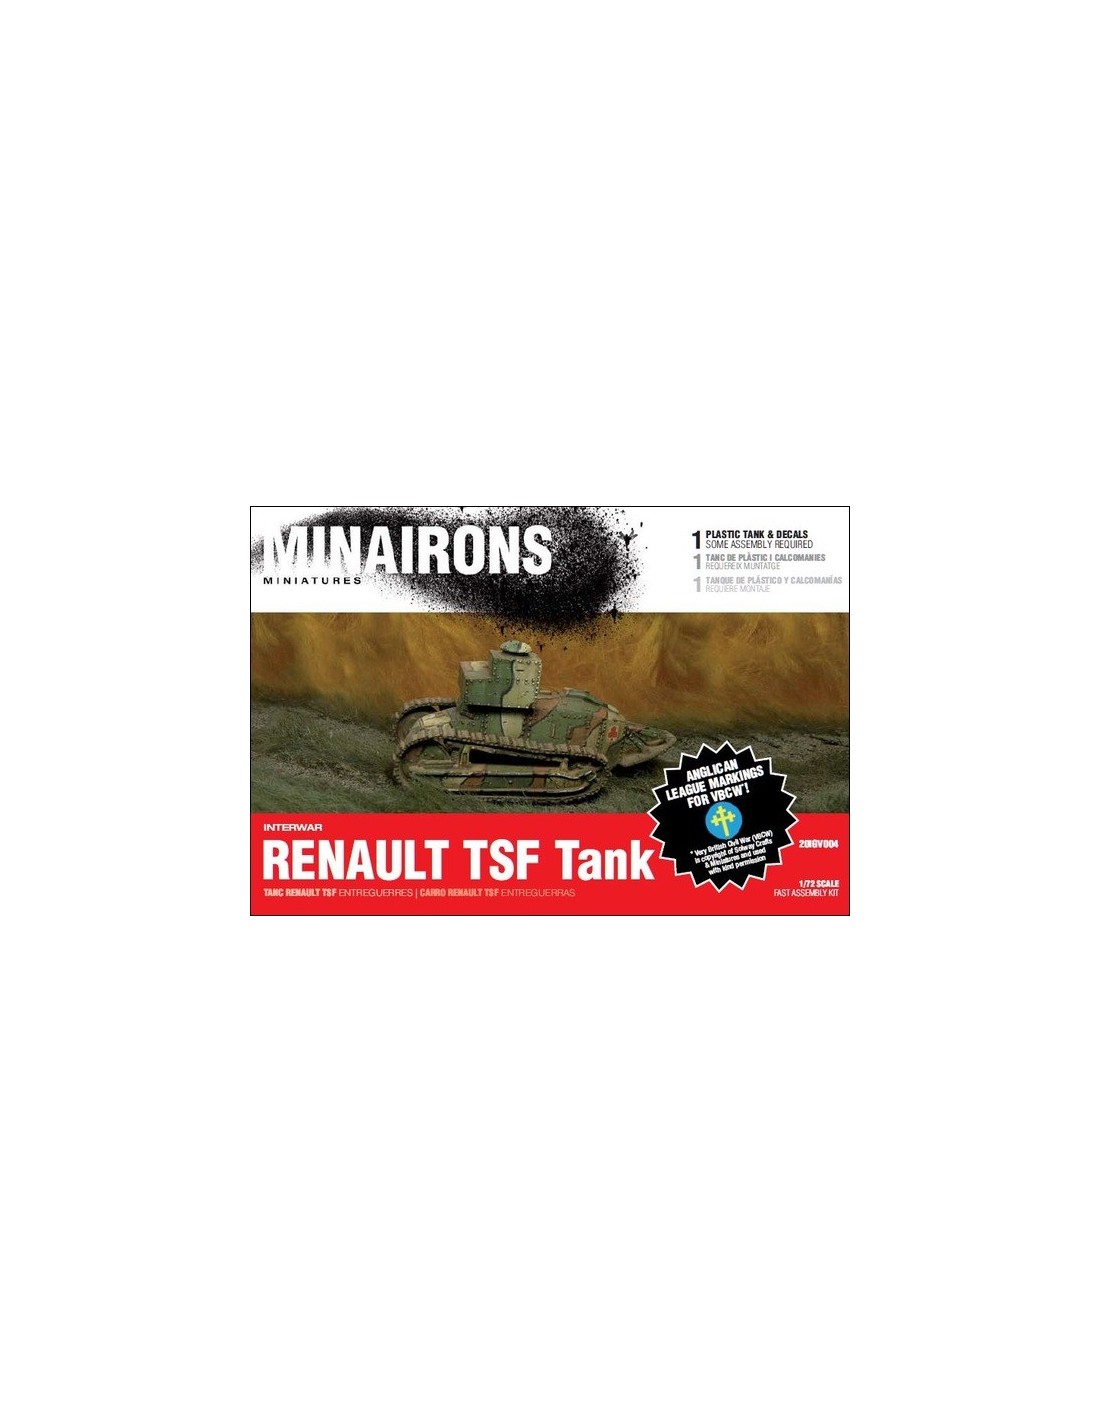 Renault TSF Radio Tank [MNA-20IGV004]